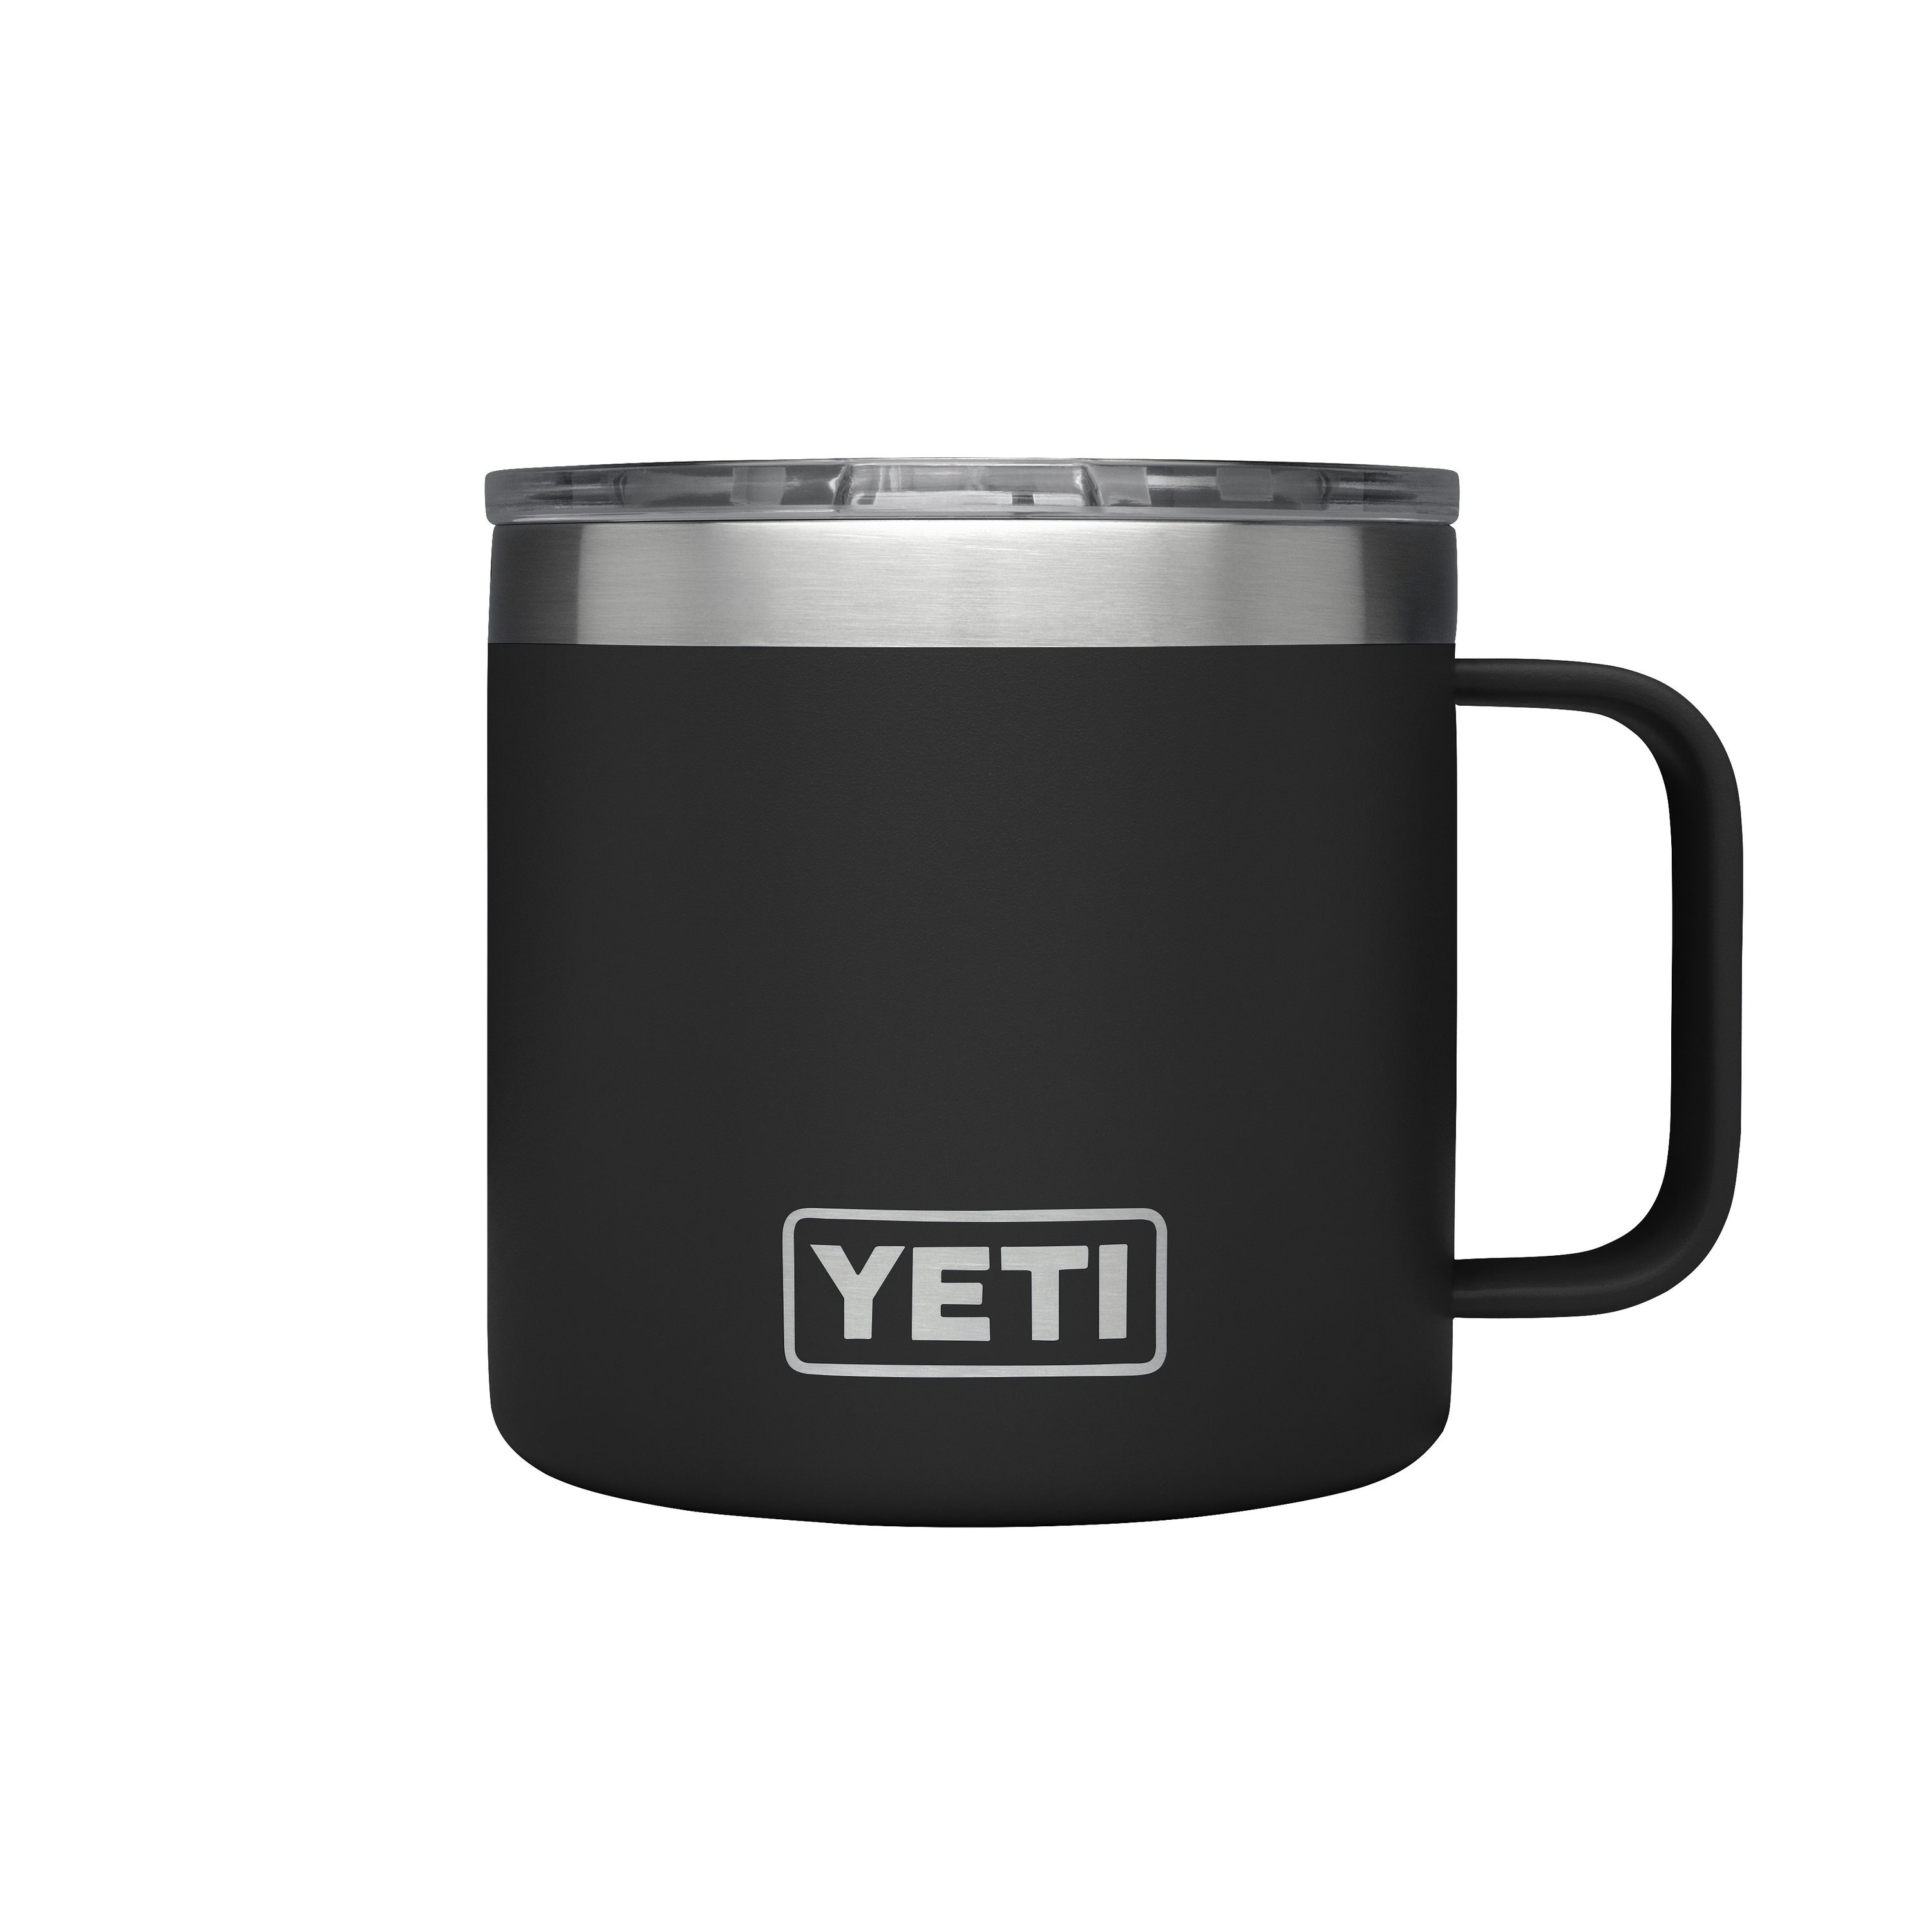 New Yeti Rambler 14 oz Triplegrip Handle Camp Cup Mug - Seafoam